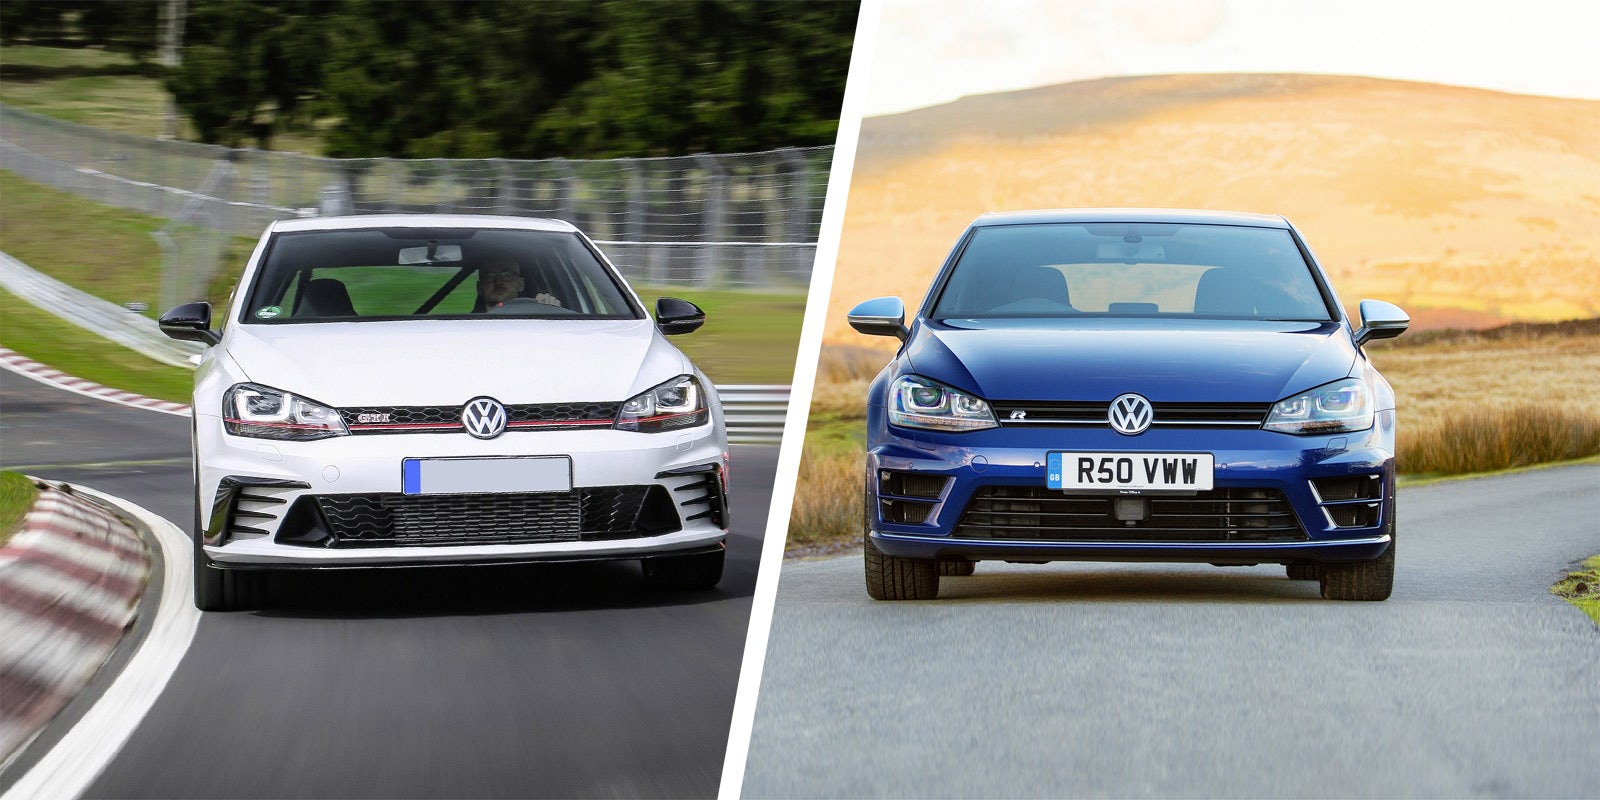 VW Golf GTI Clubsport S vs Golf R comparison